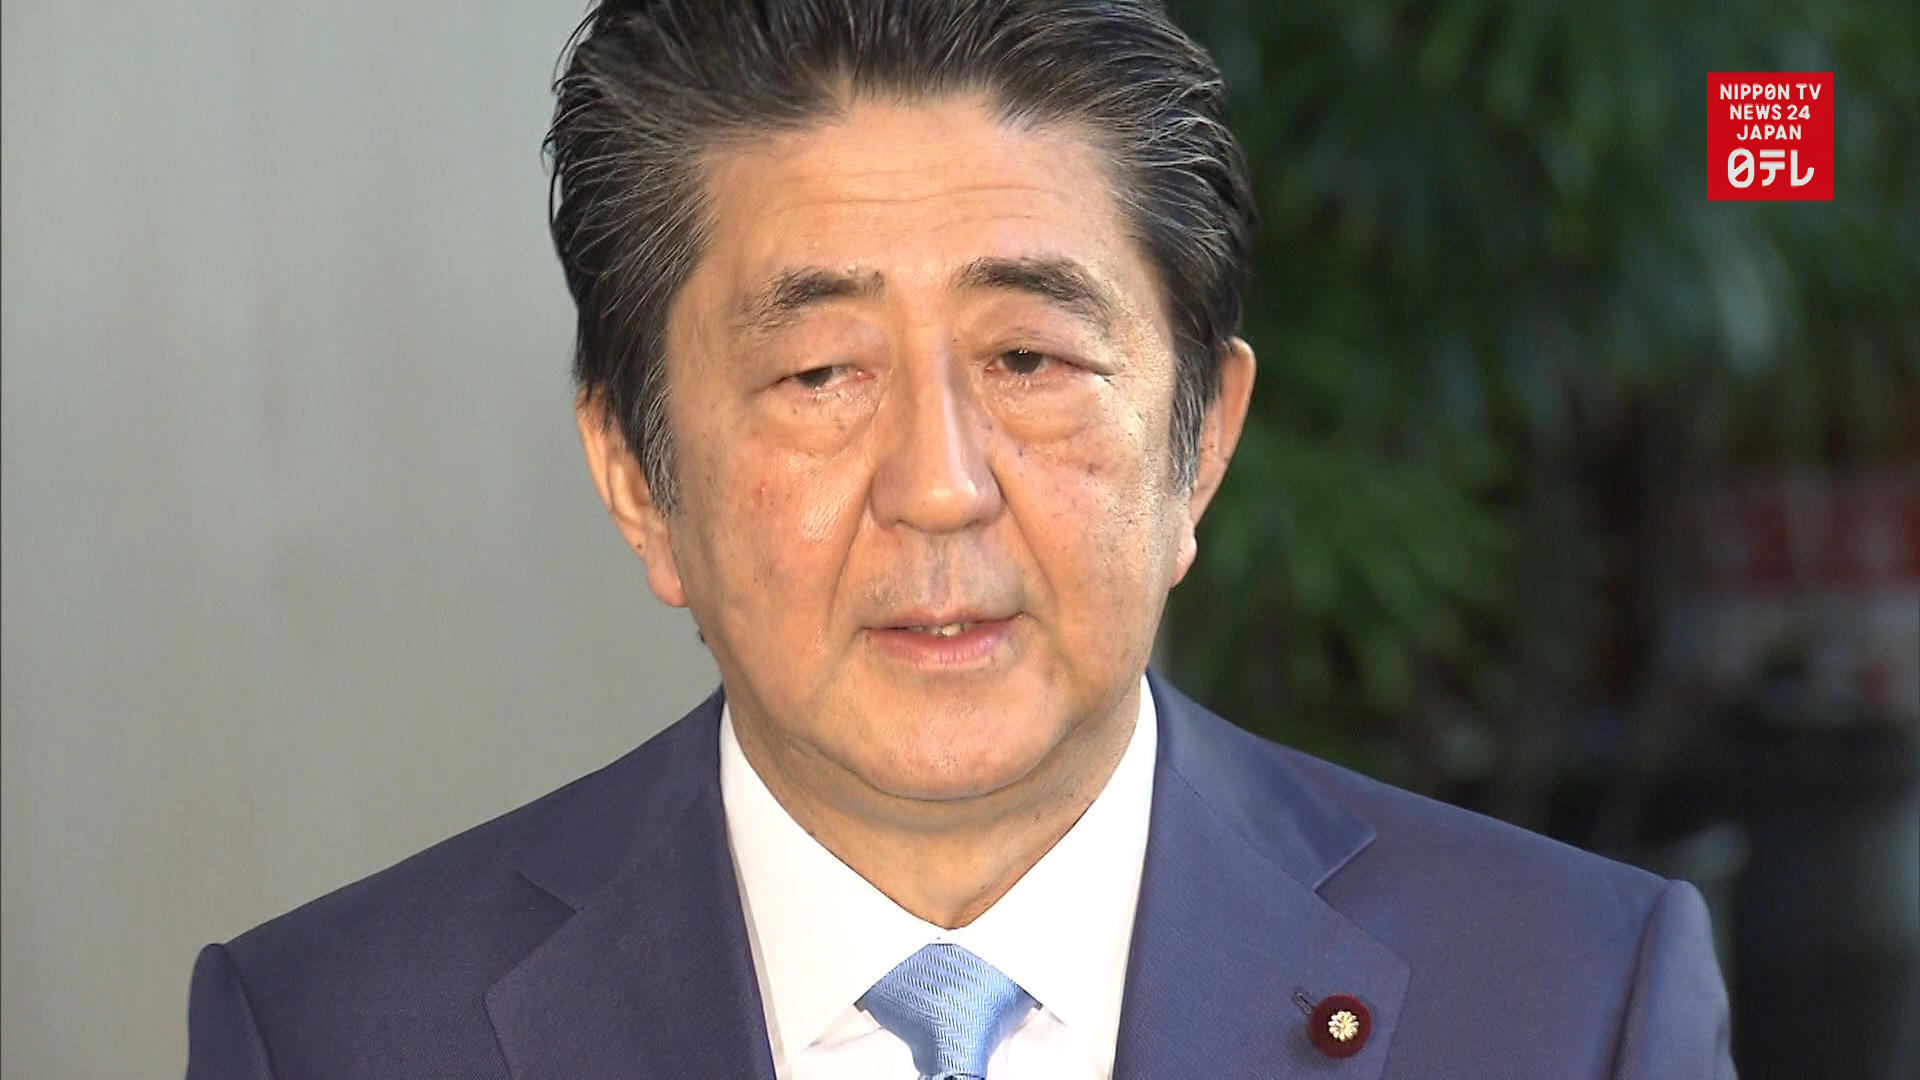 Abe is Japan's longest-serving prime minister